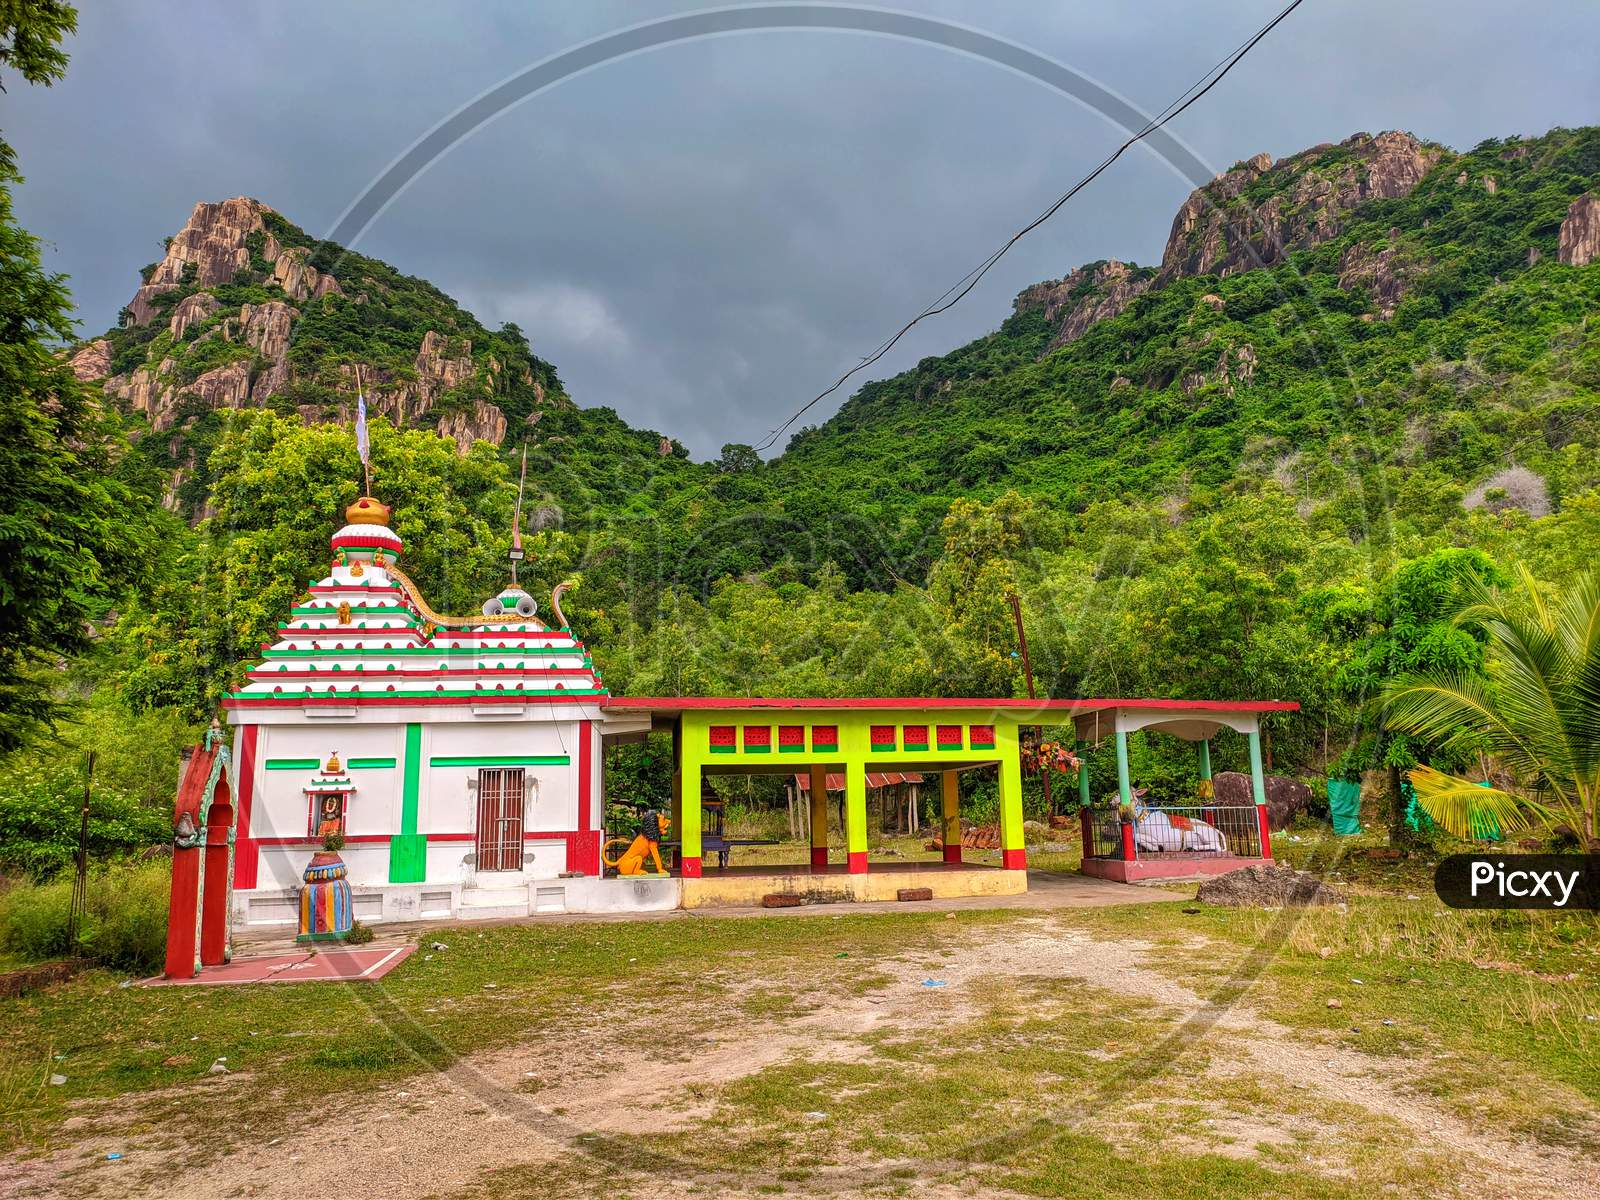 Lord siva's temple near a mountain